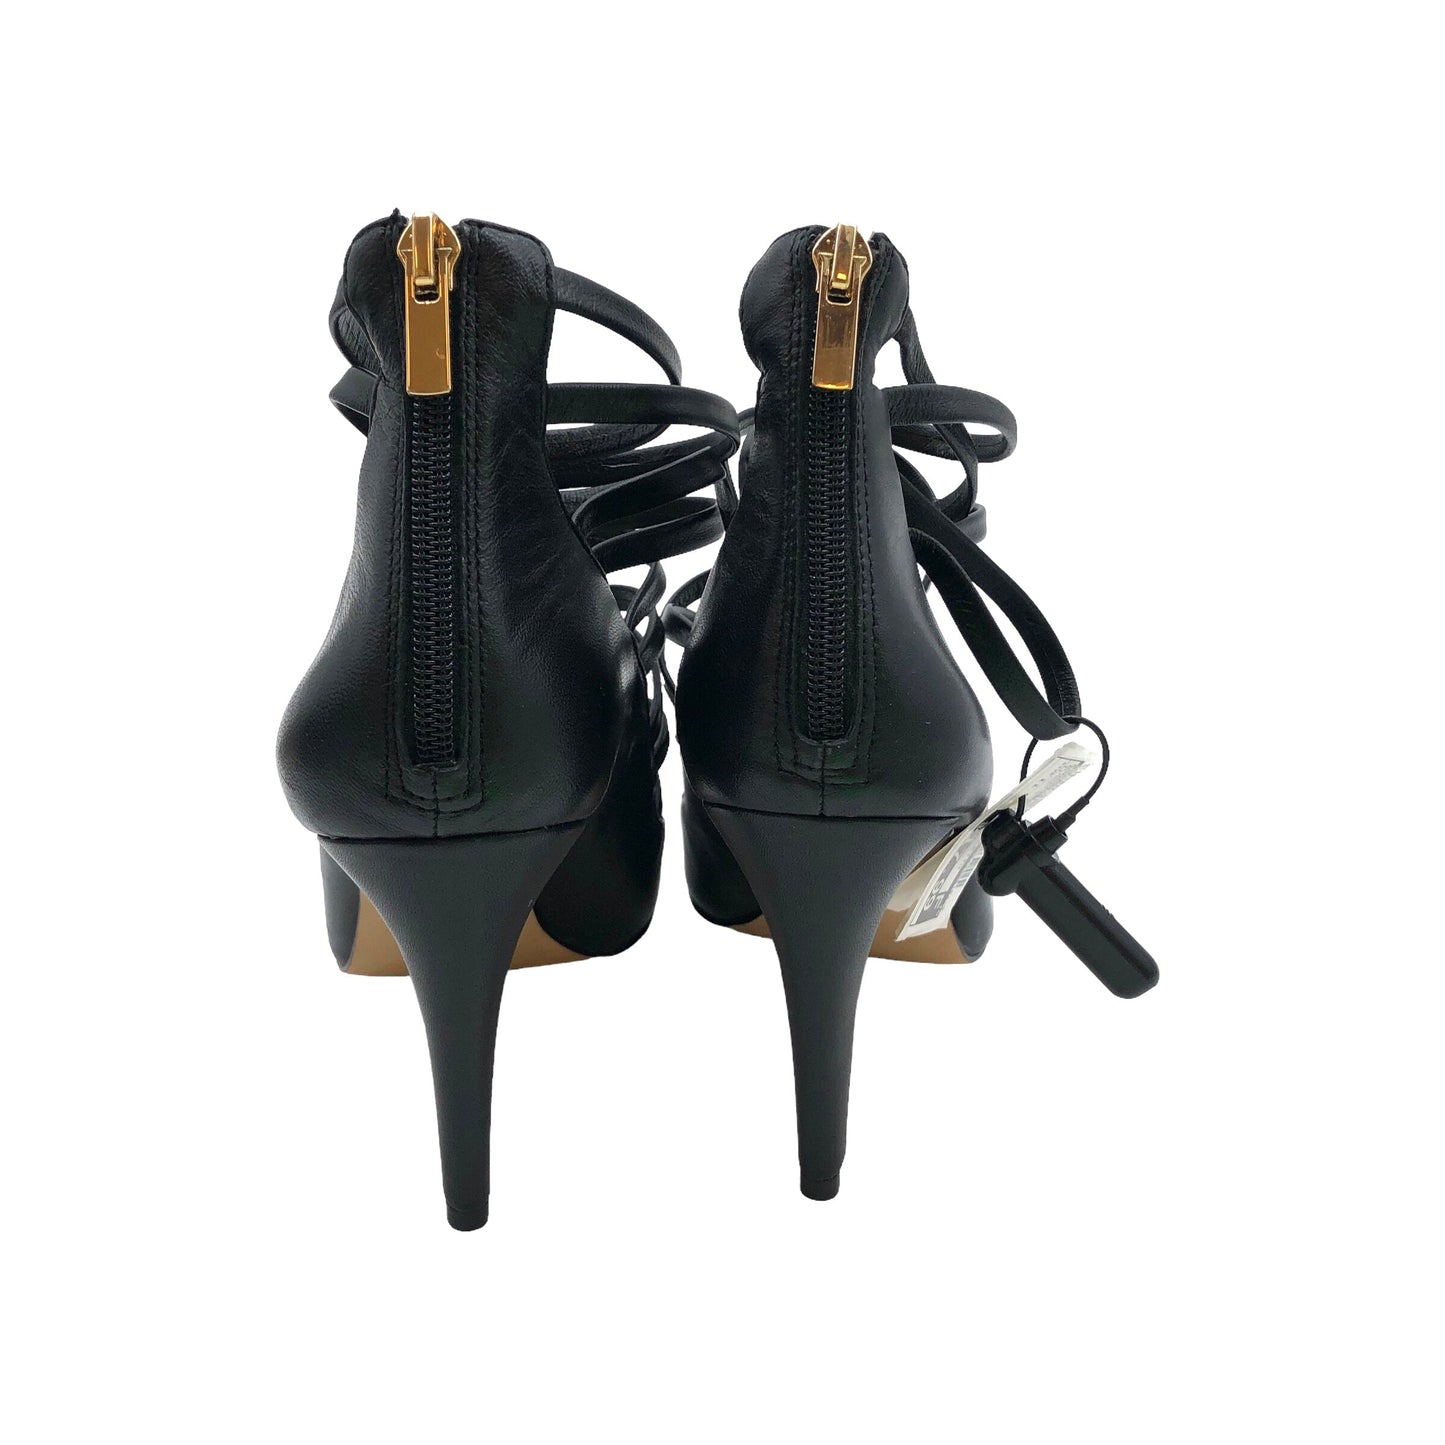 Black Sandals Heels Stiletto Banana Republic, Size 11